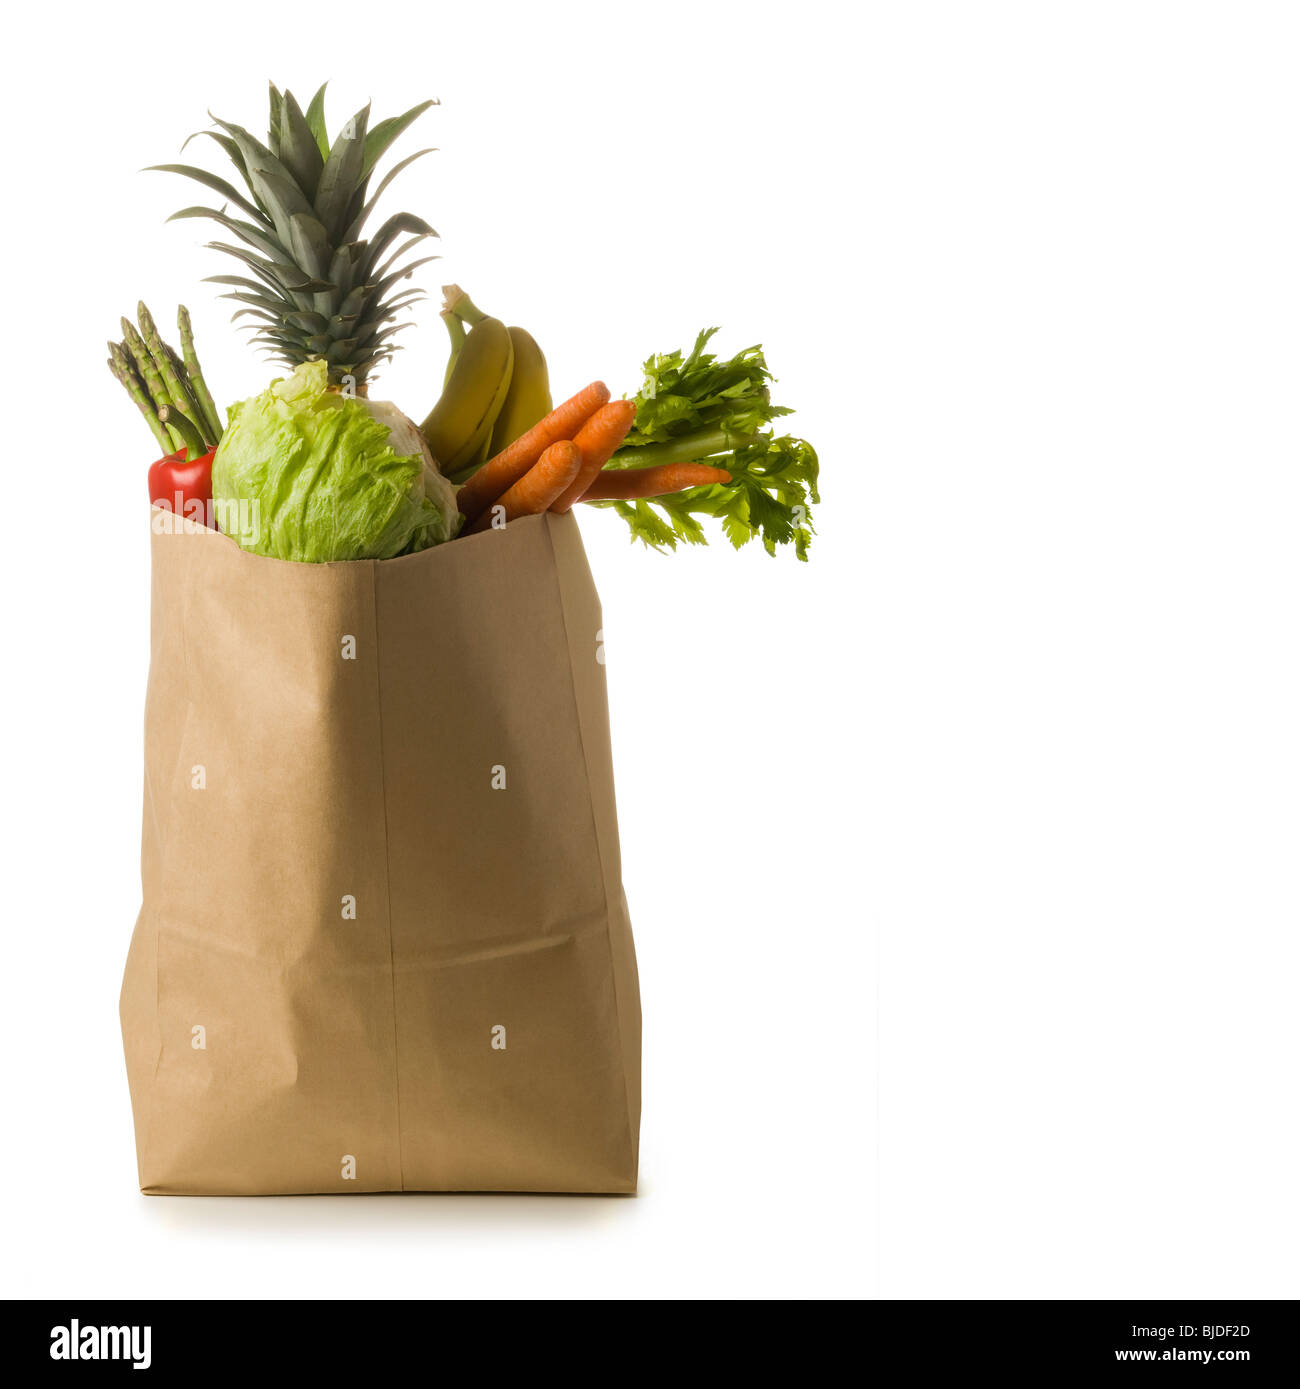 https://c8.alamy.com/comp/BJDF2D/grocery-bag-full-of-vegetables-BJDF2D.jpg